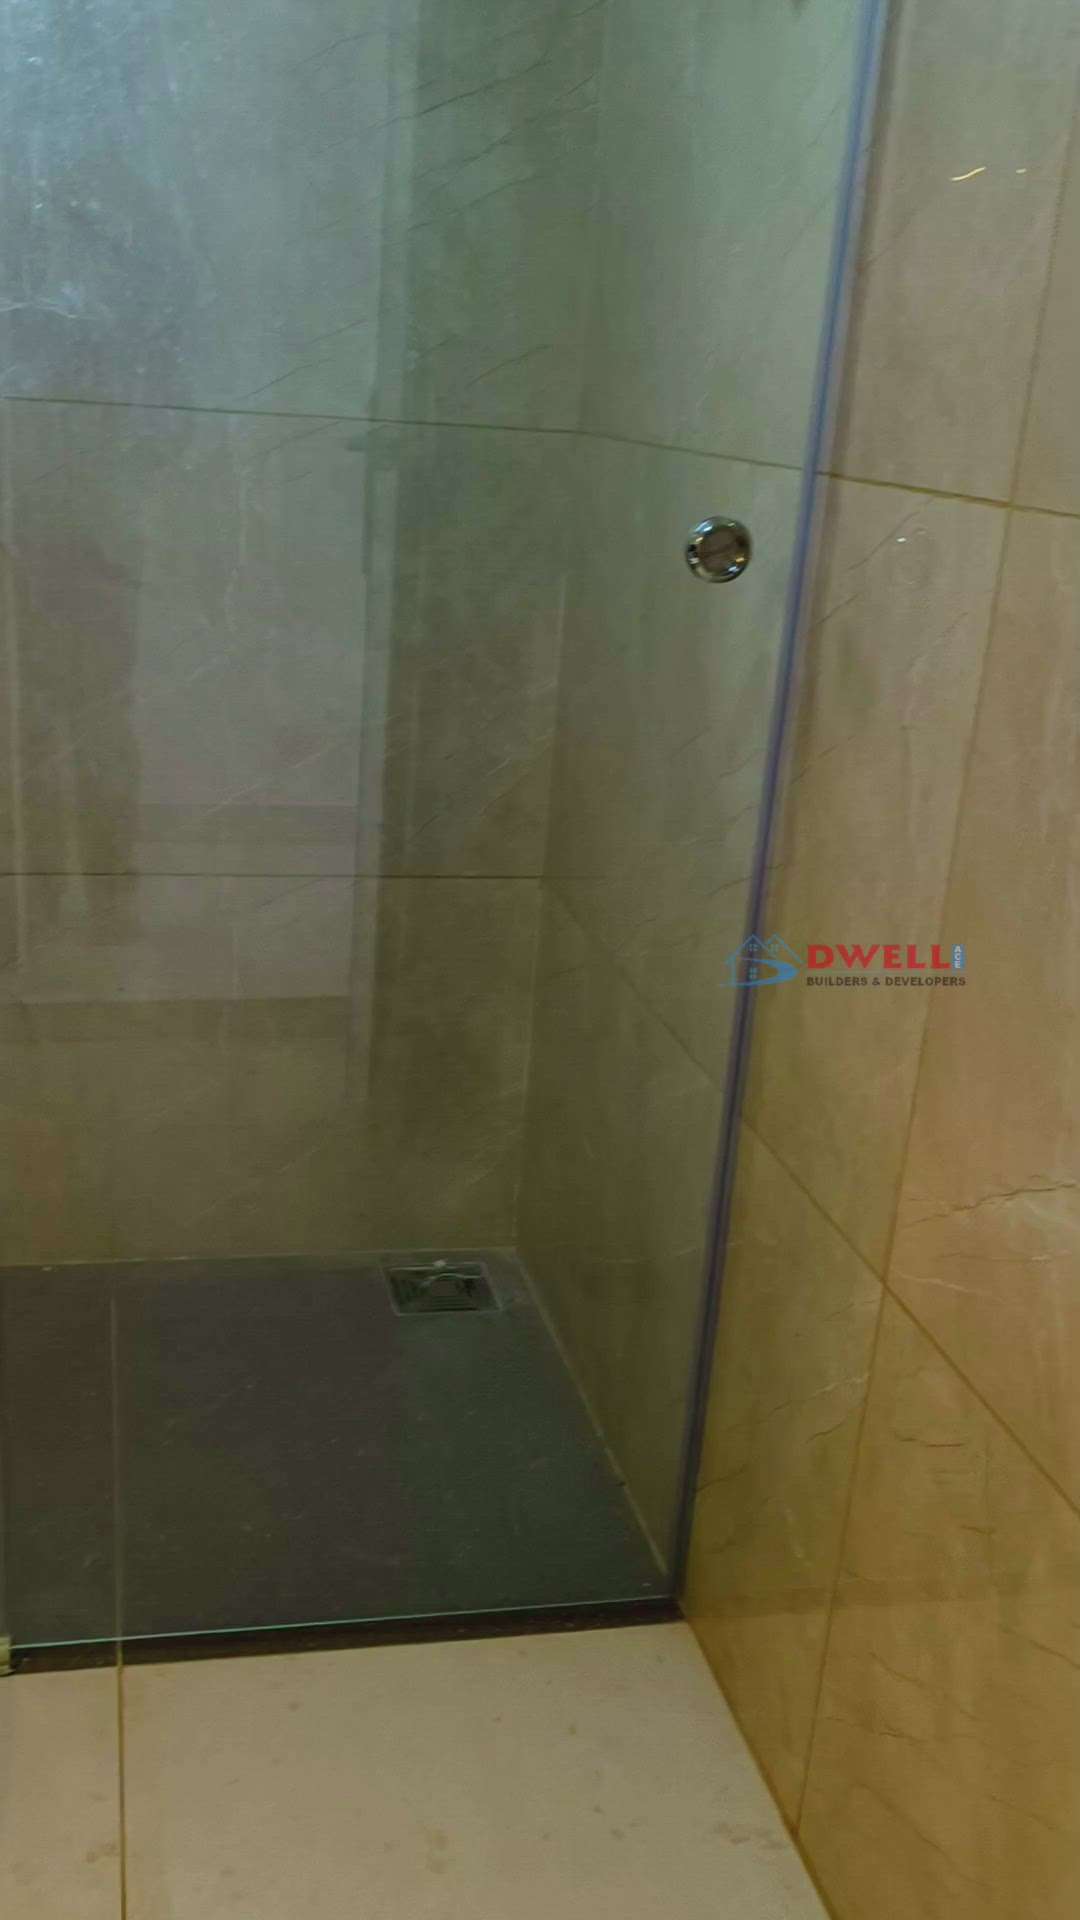 Finished Washroom #bathroom
#toilet #tiles #walltiles #BathroomTIles #wallhungwc #wallhungtoilet #closet #faucetdesign #faucet #shower #showerpartition #glasspartition #wetarea #dryarea #washroomdesign #washbasin #washroomwork #mirror #SlidingDoors